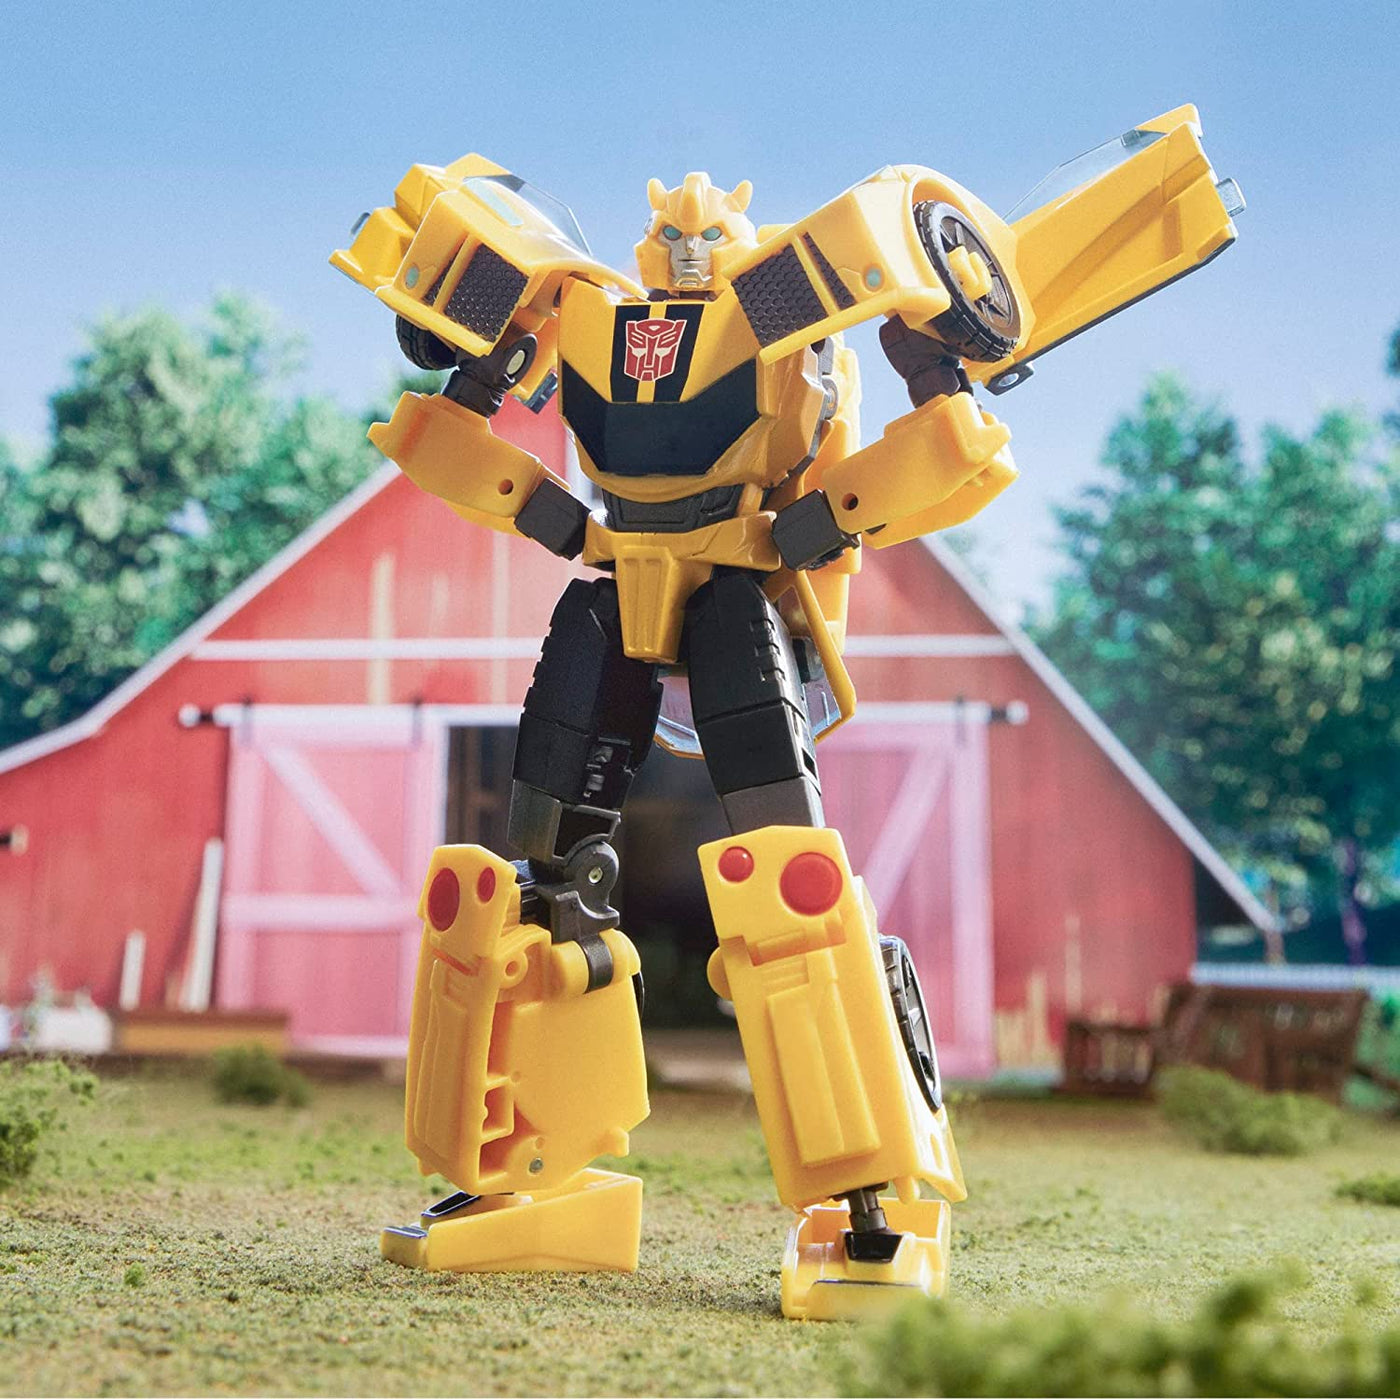 Transformer Earthspark: Bumblebee - Build A Figure 5 Inch | Hasbro